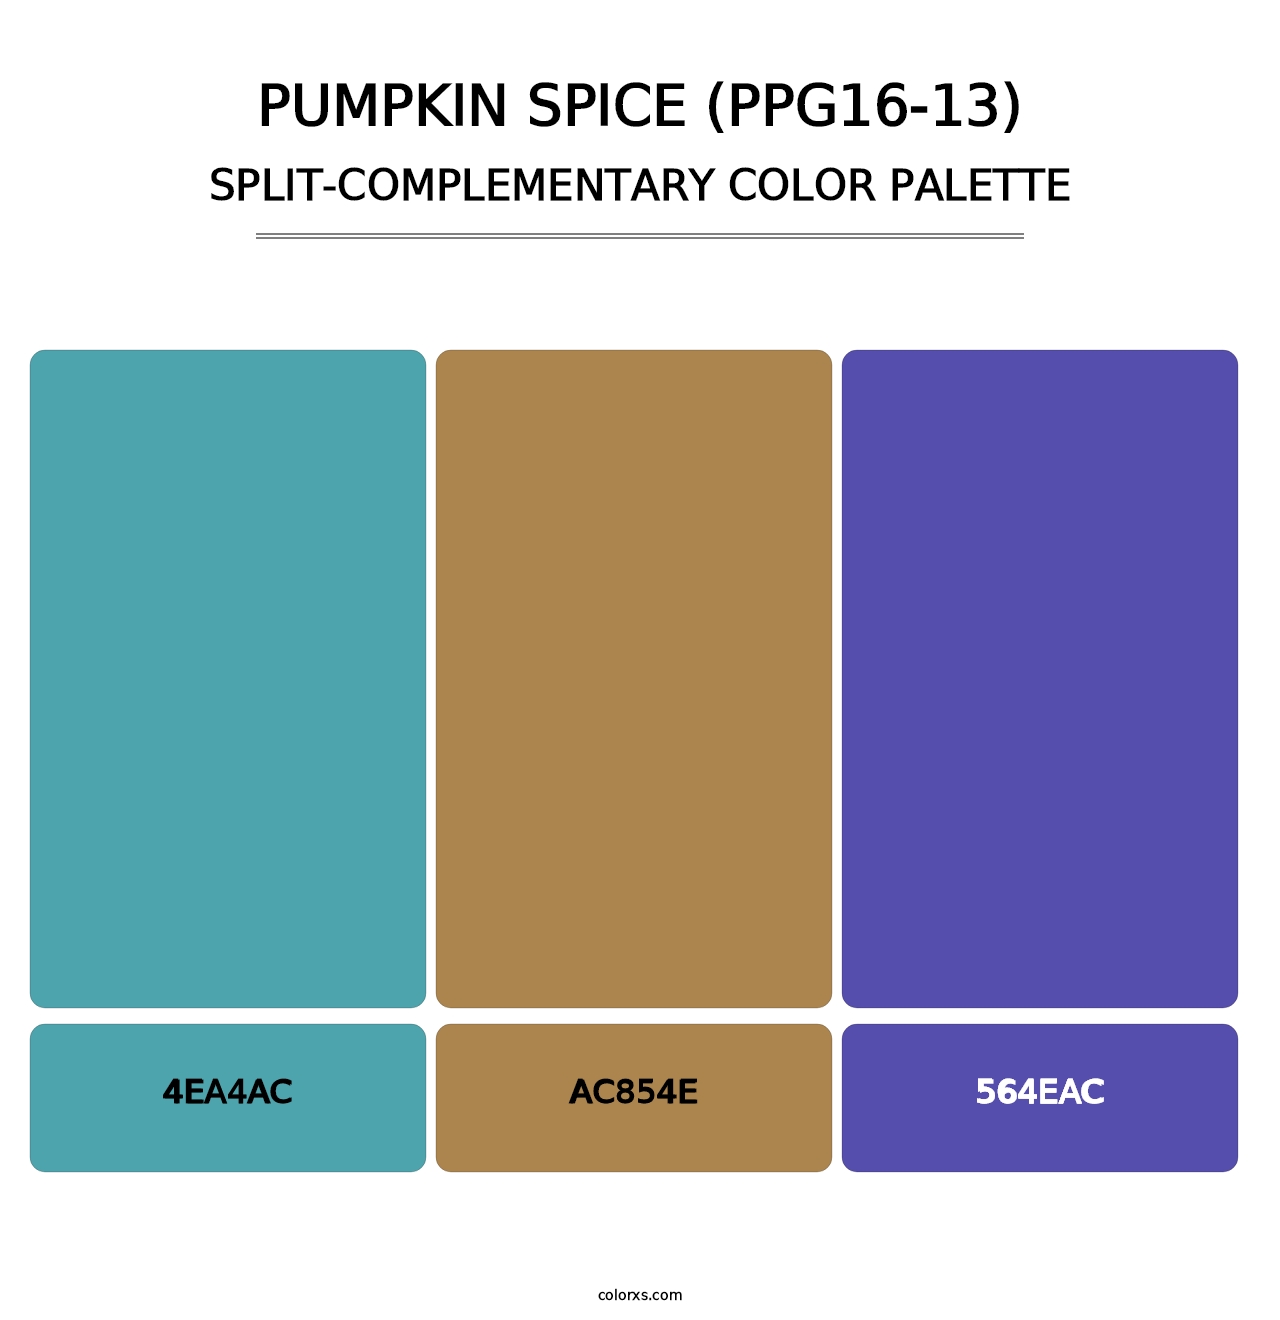 Pumpkin Spice (PPG16-13) - Split-Complementary Color Palette